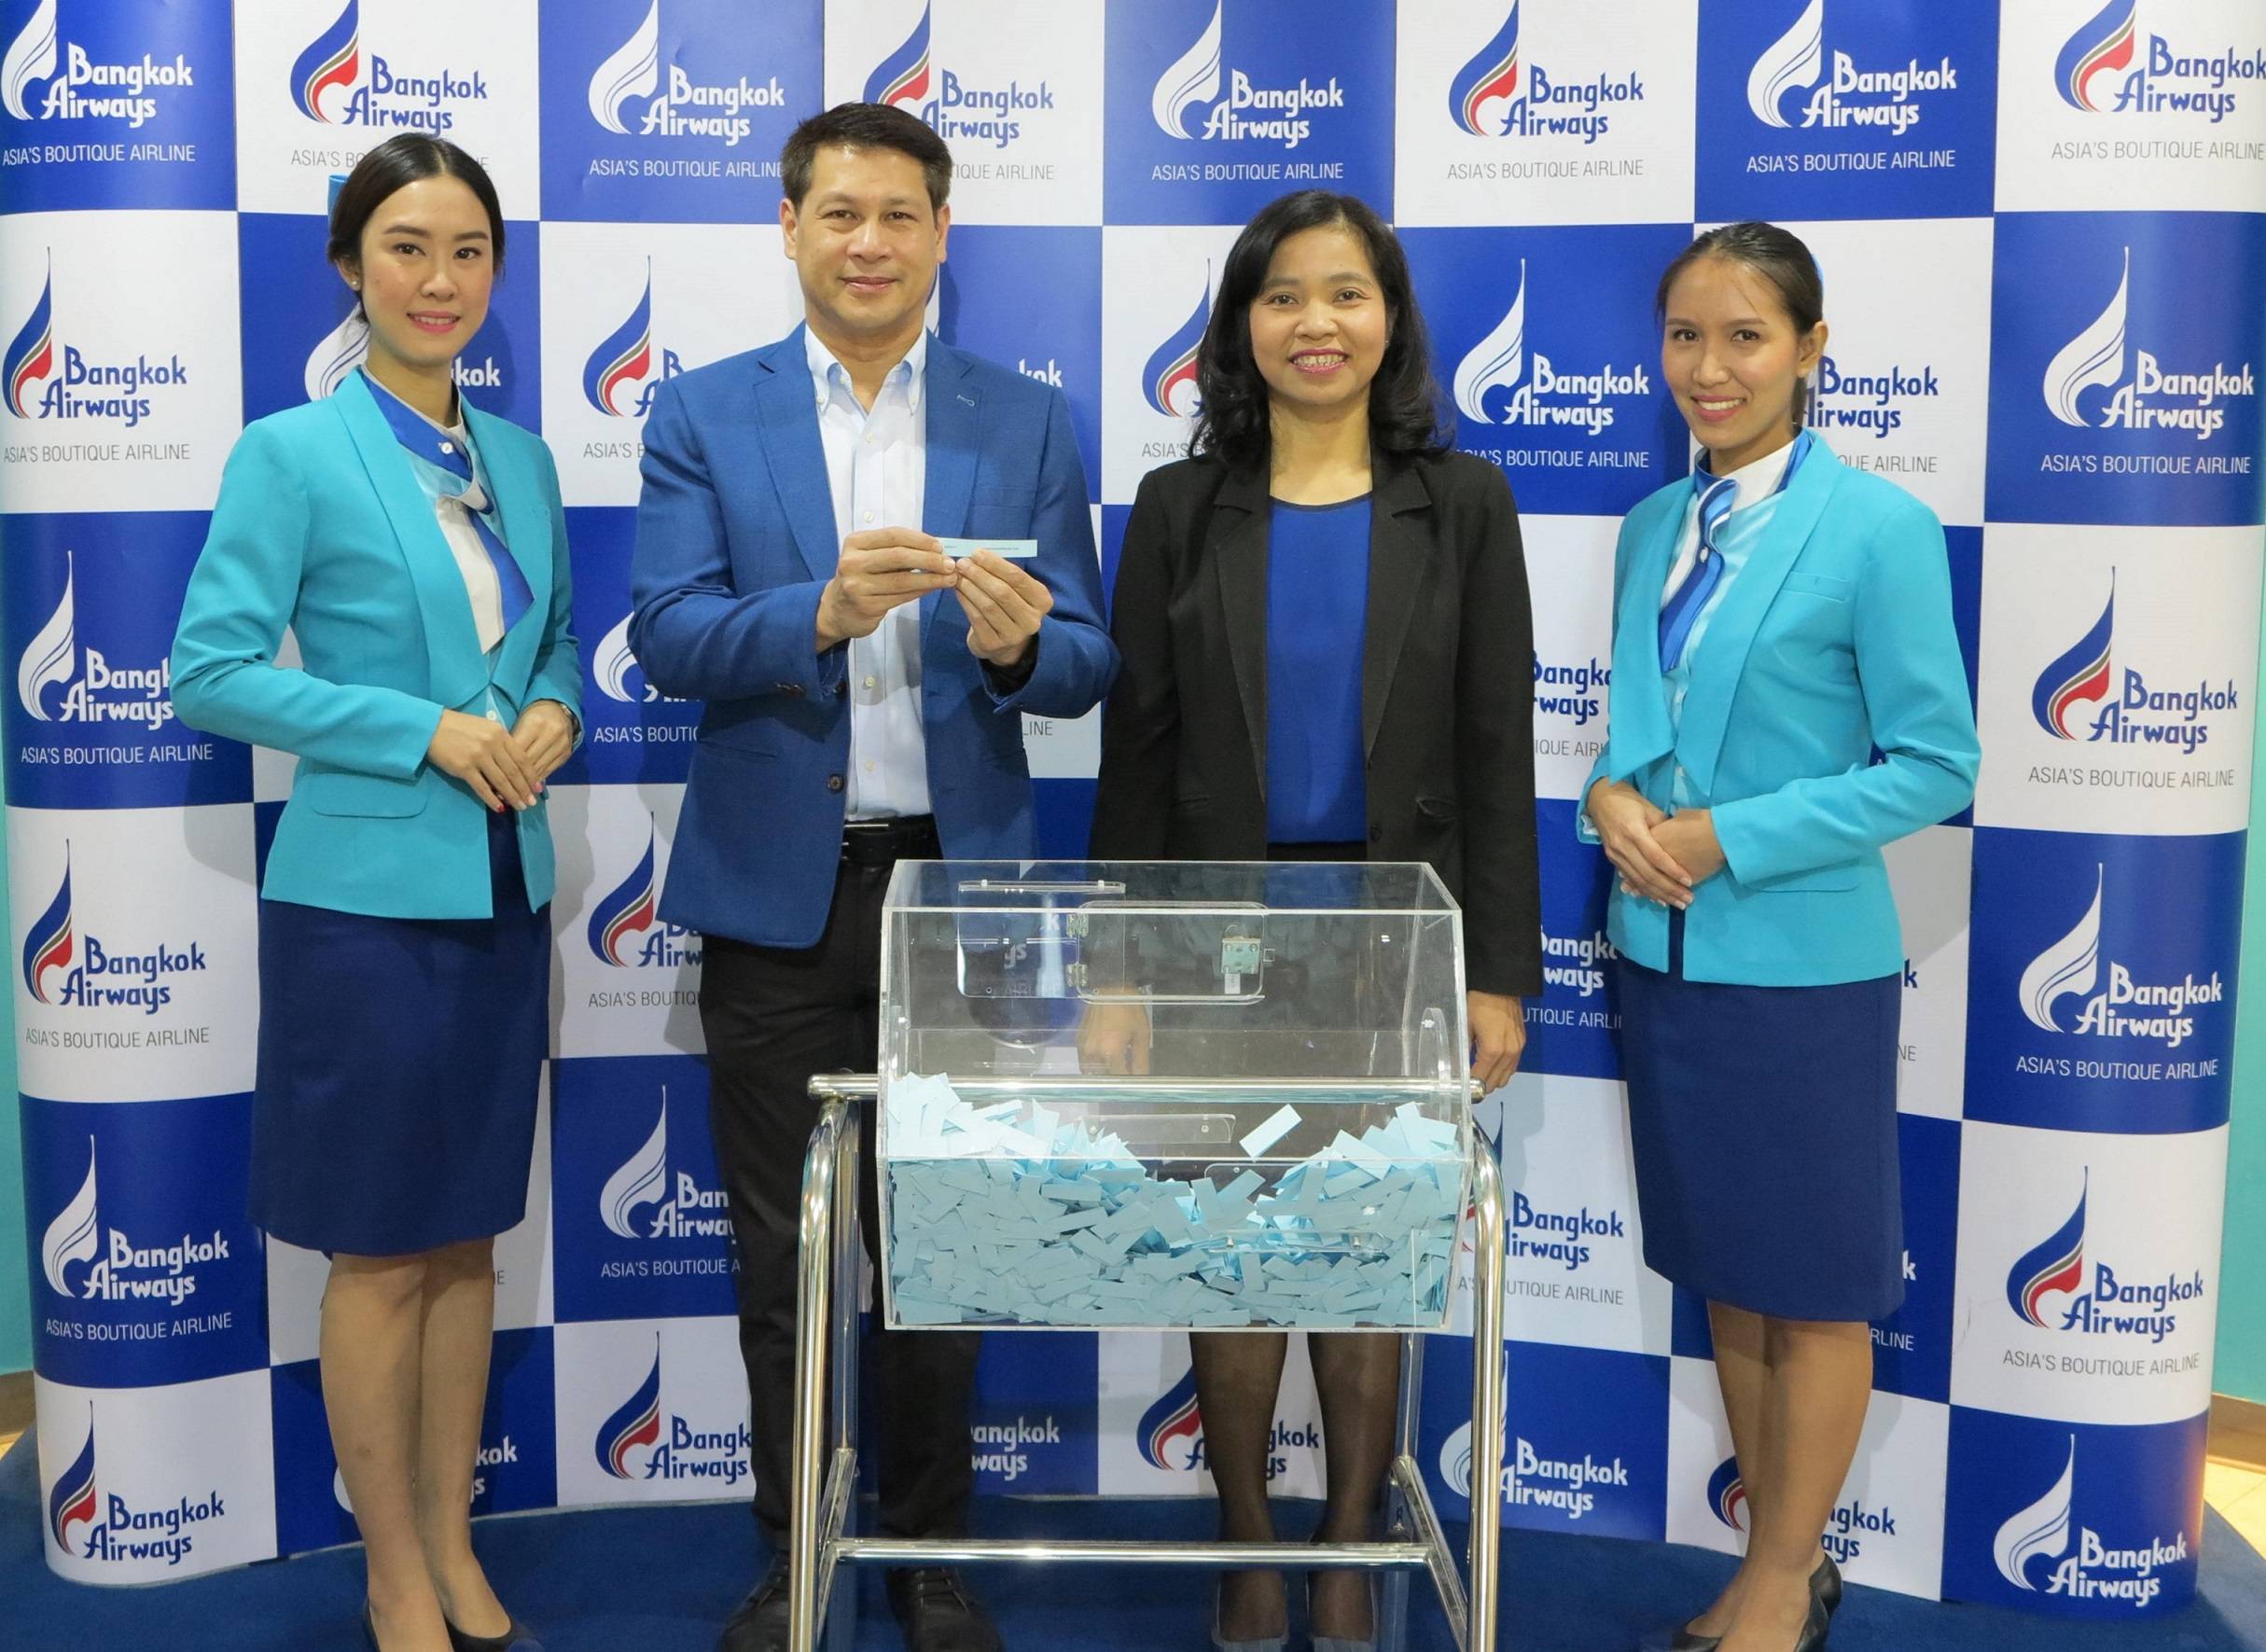 Bangkok airways contact details worldwide